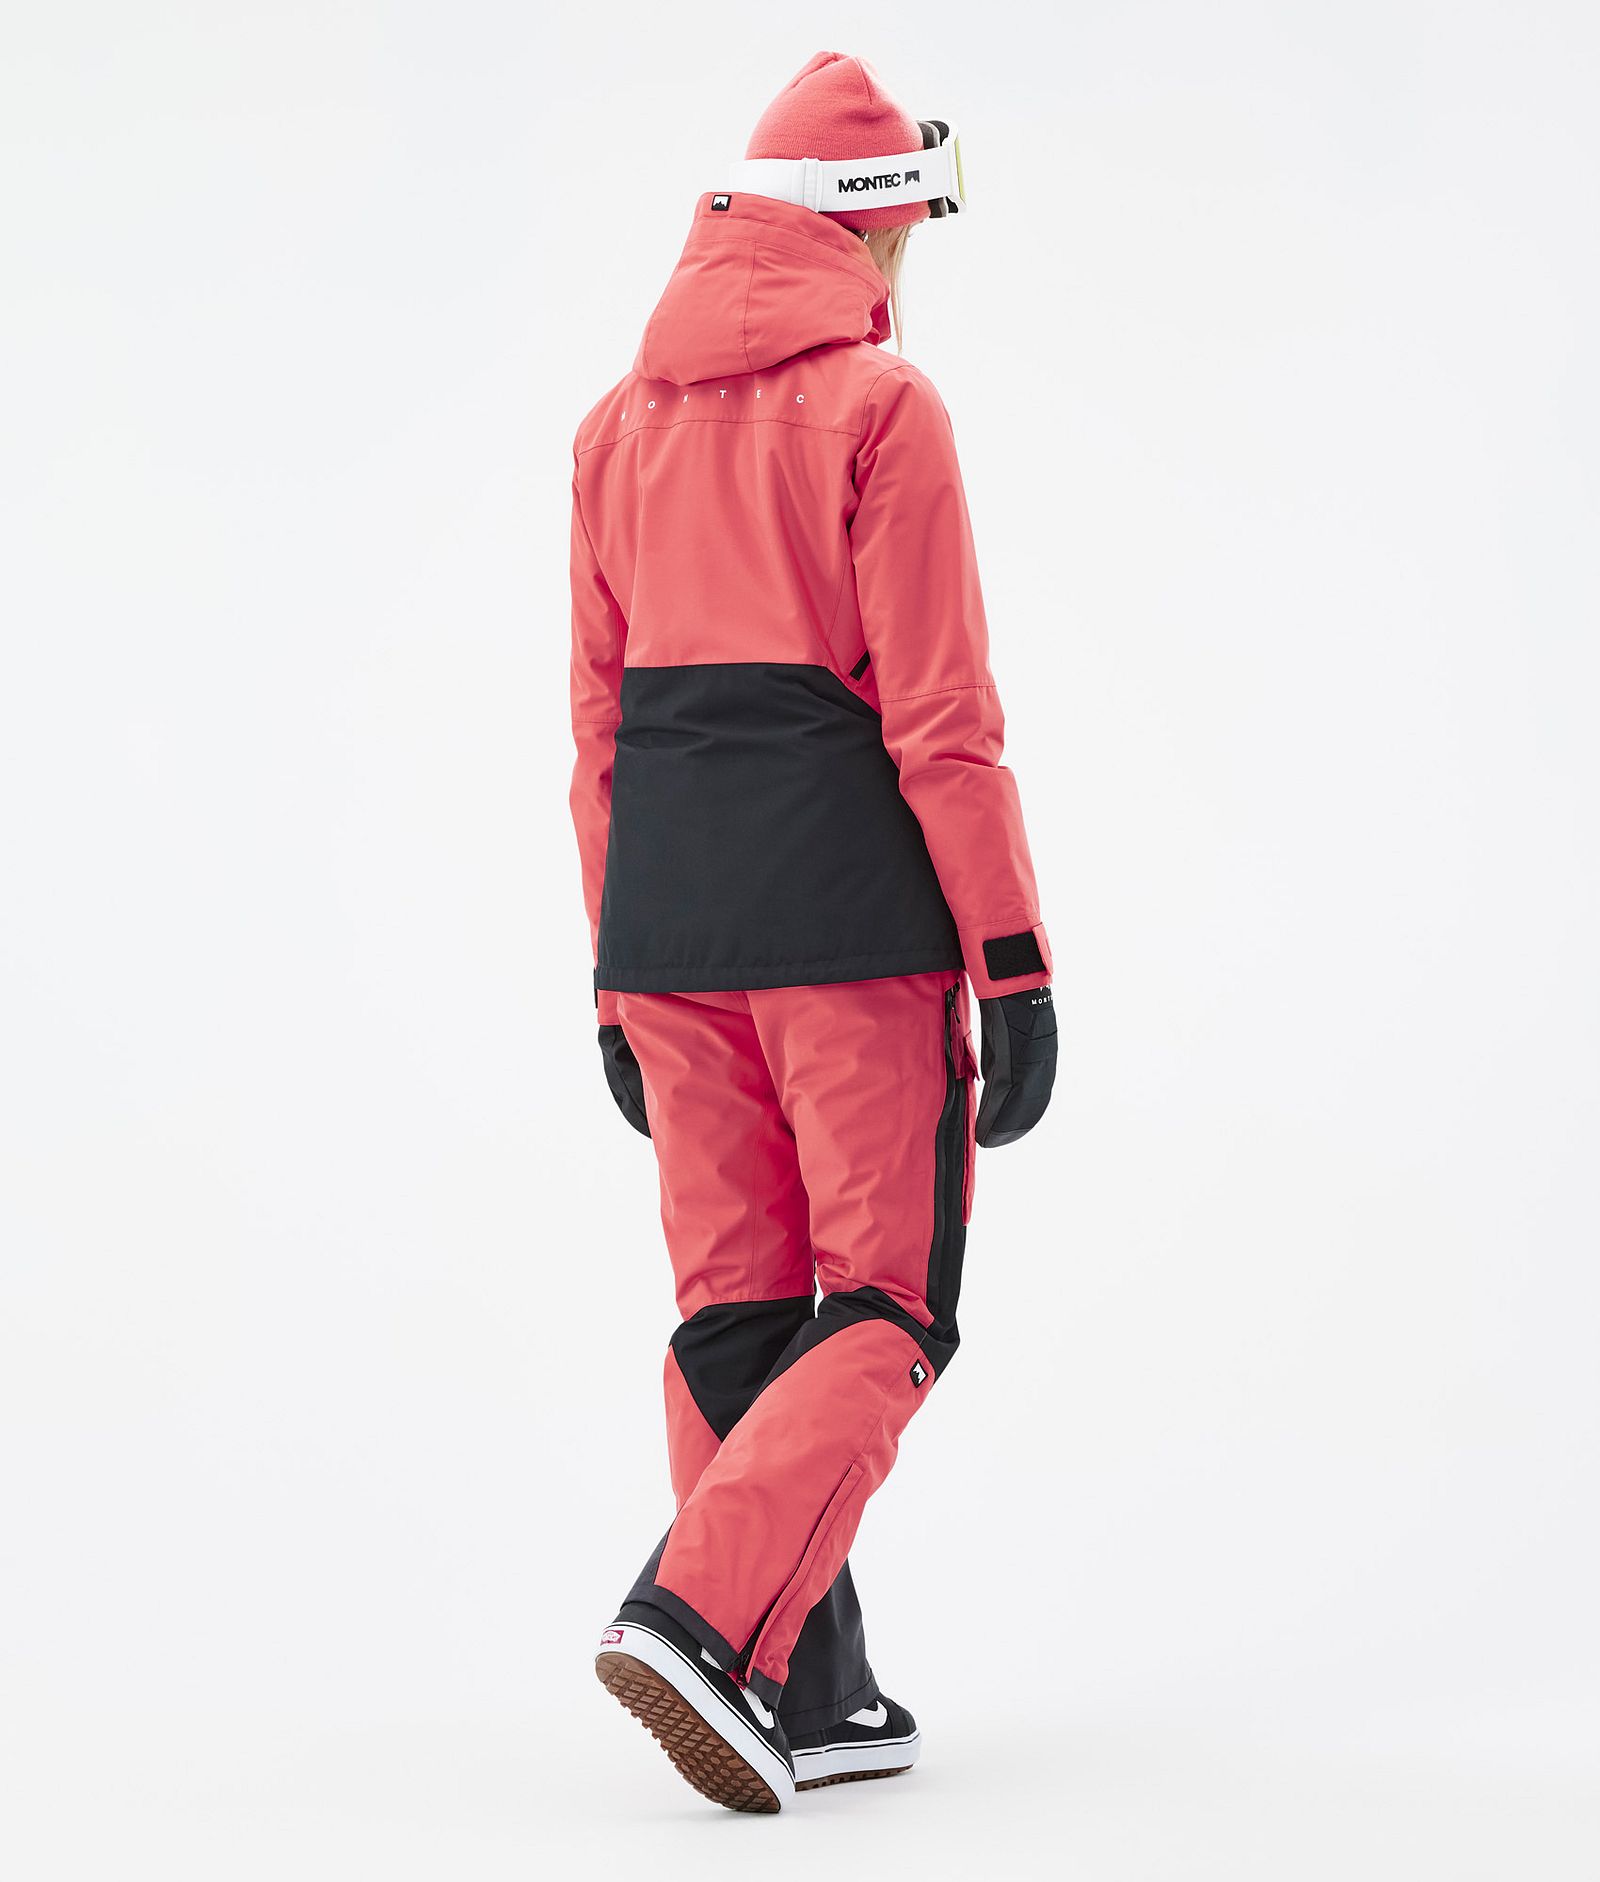 Moss W Veste Snowboard Femme Coral/Black, Image 6 sur 11